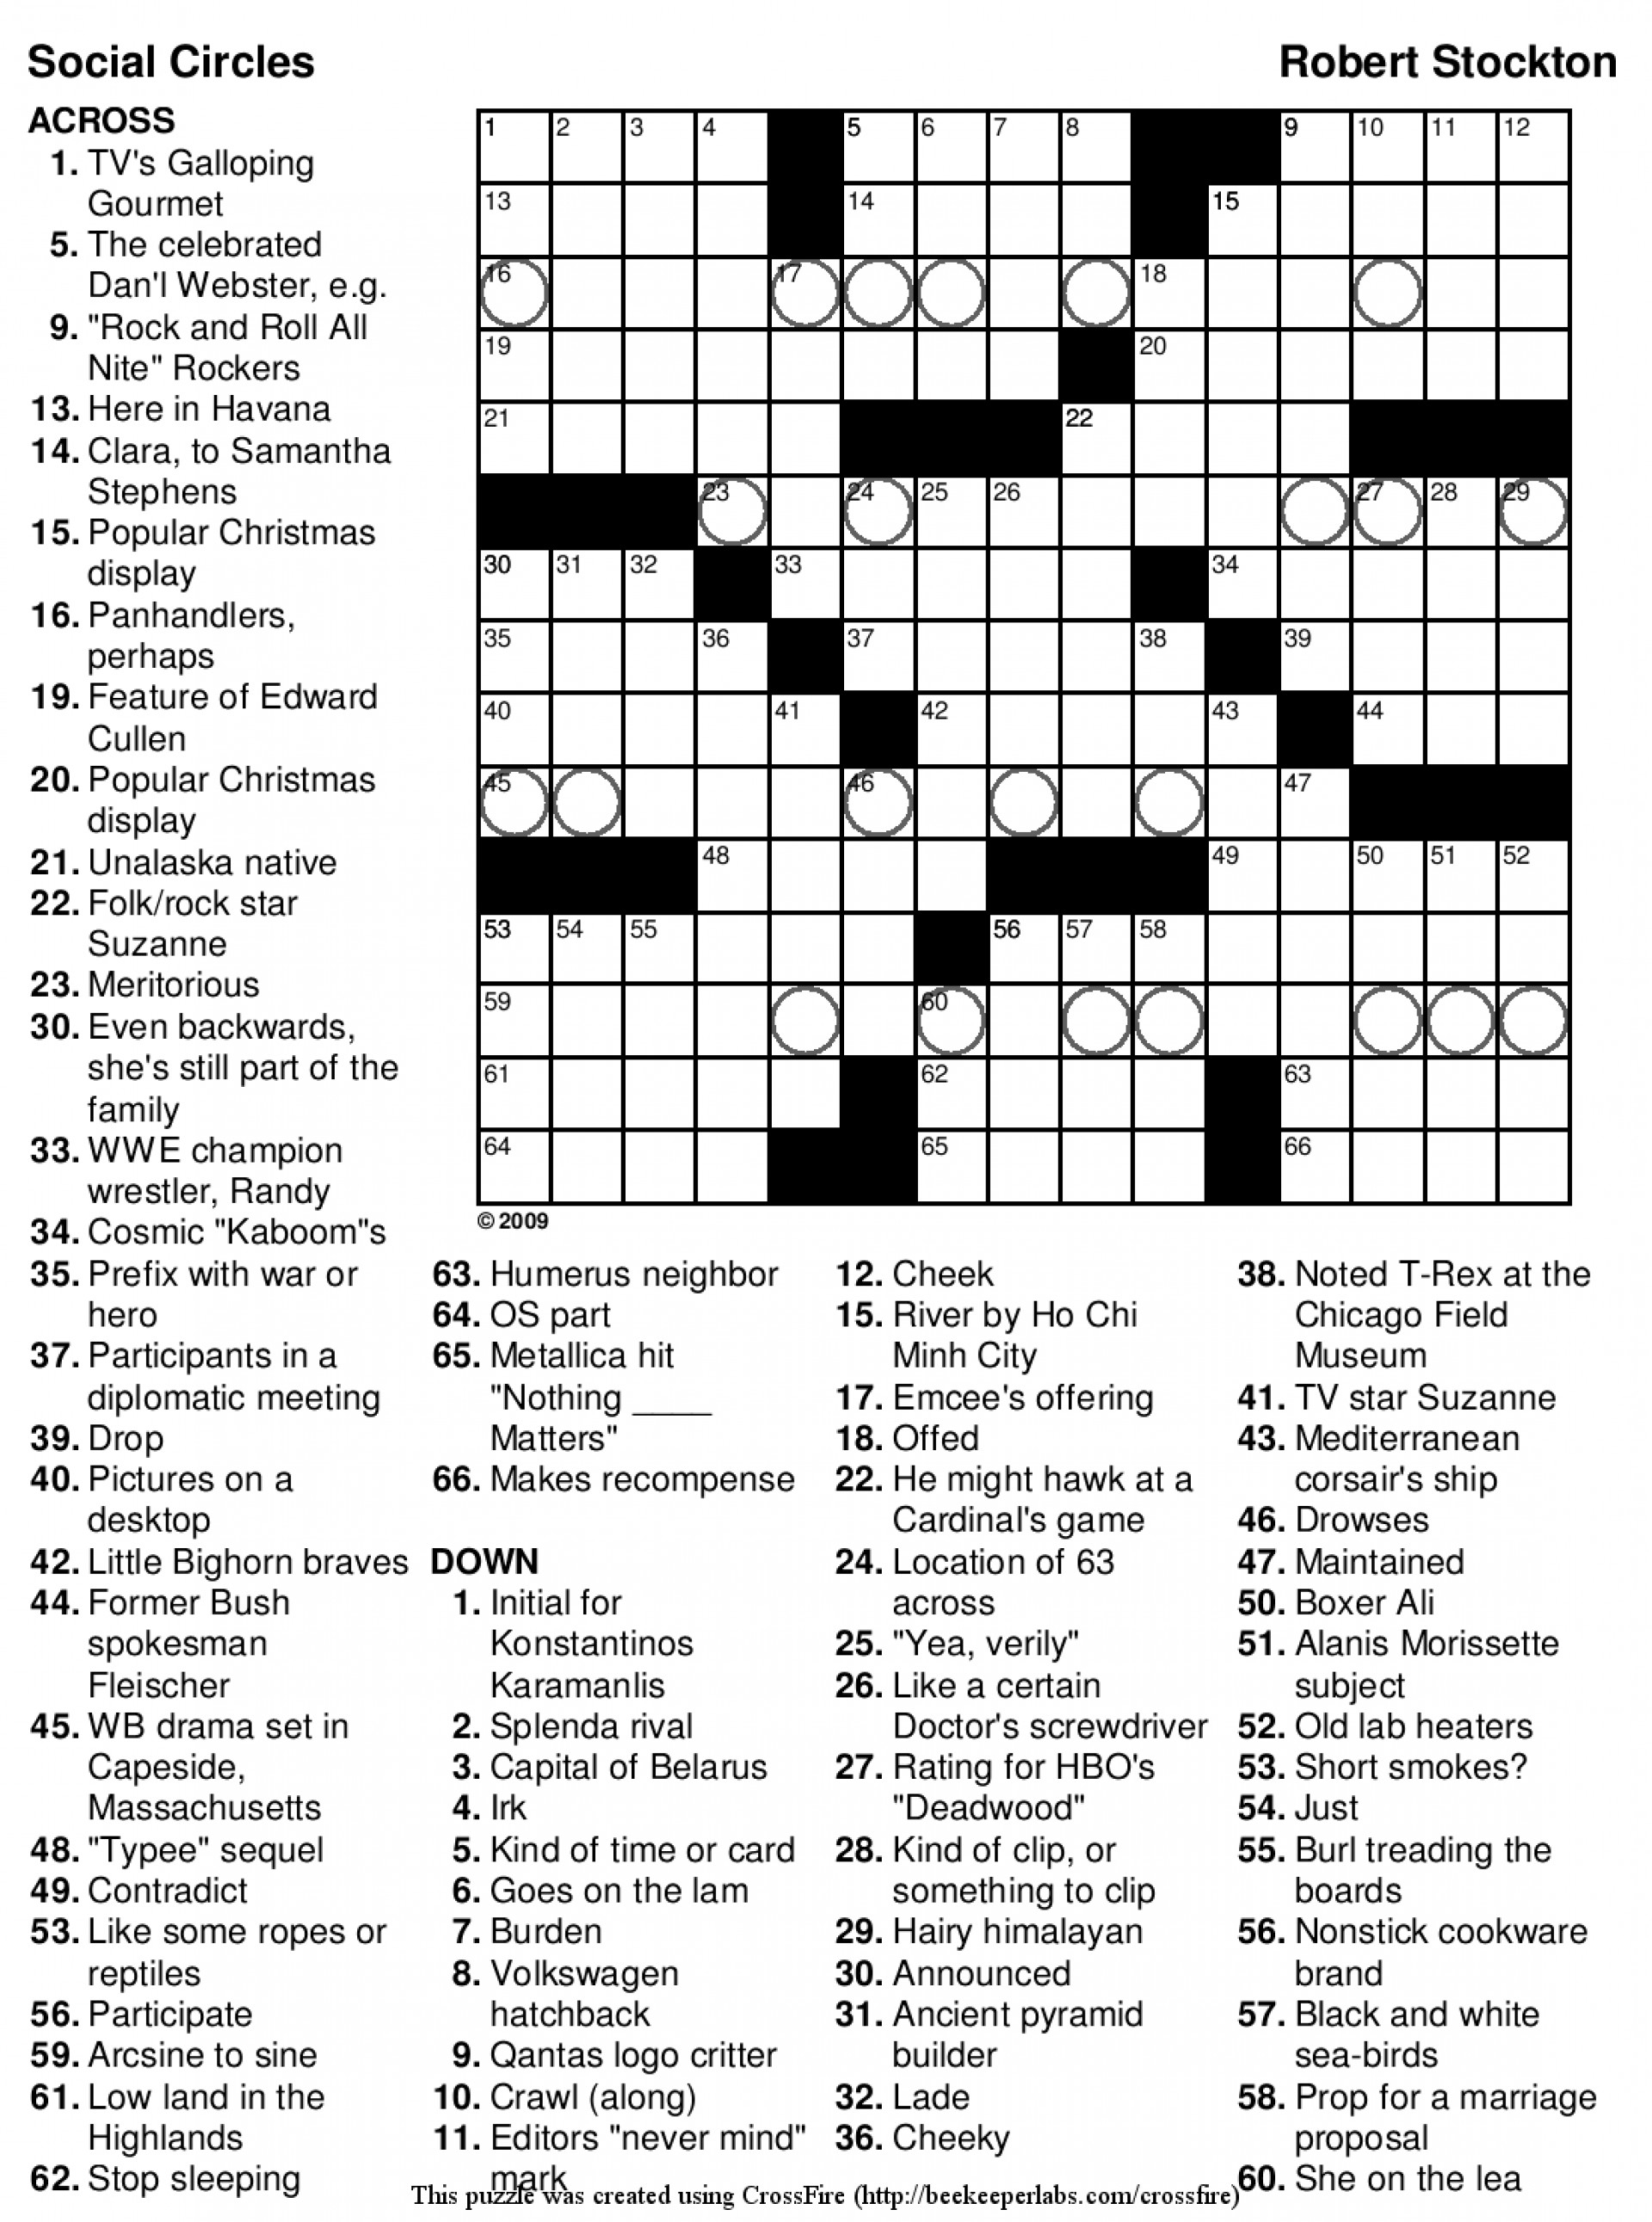 Merl Reagle Crossword Printable